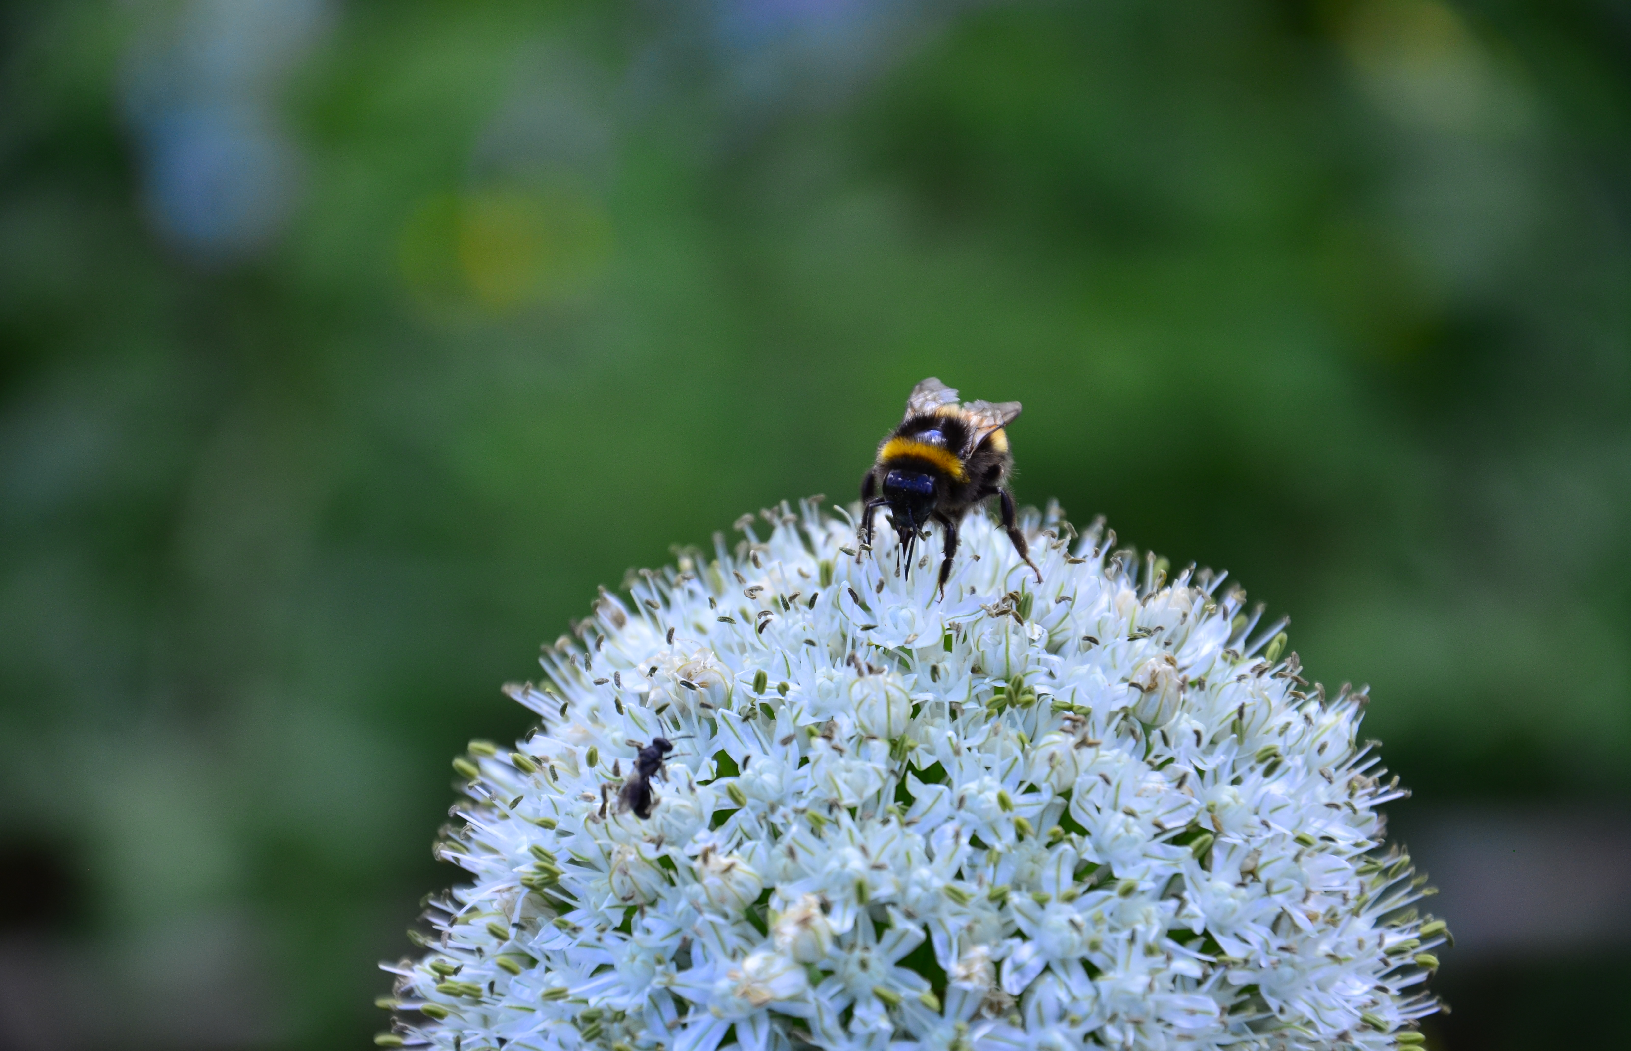 Bumblebee and wasp on allium